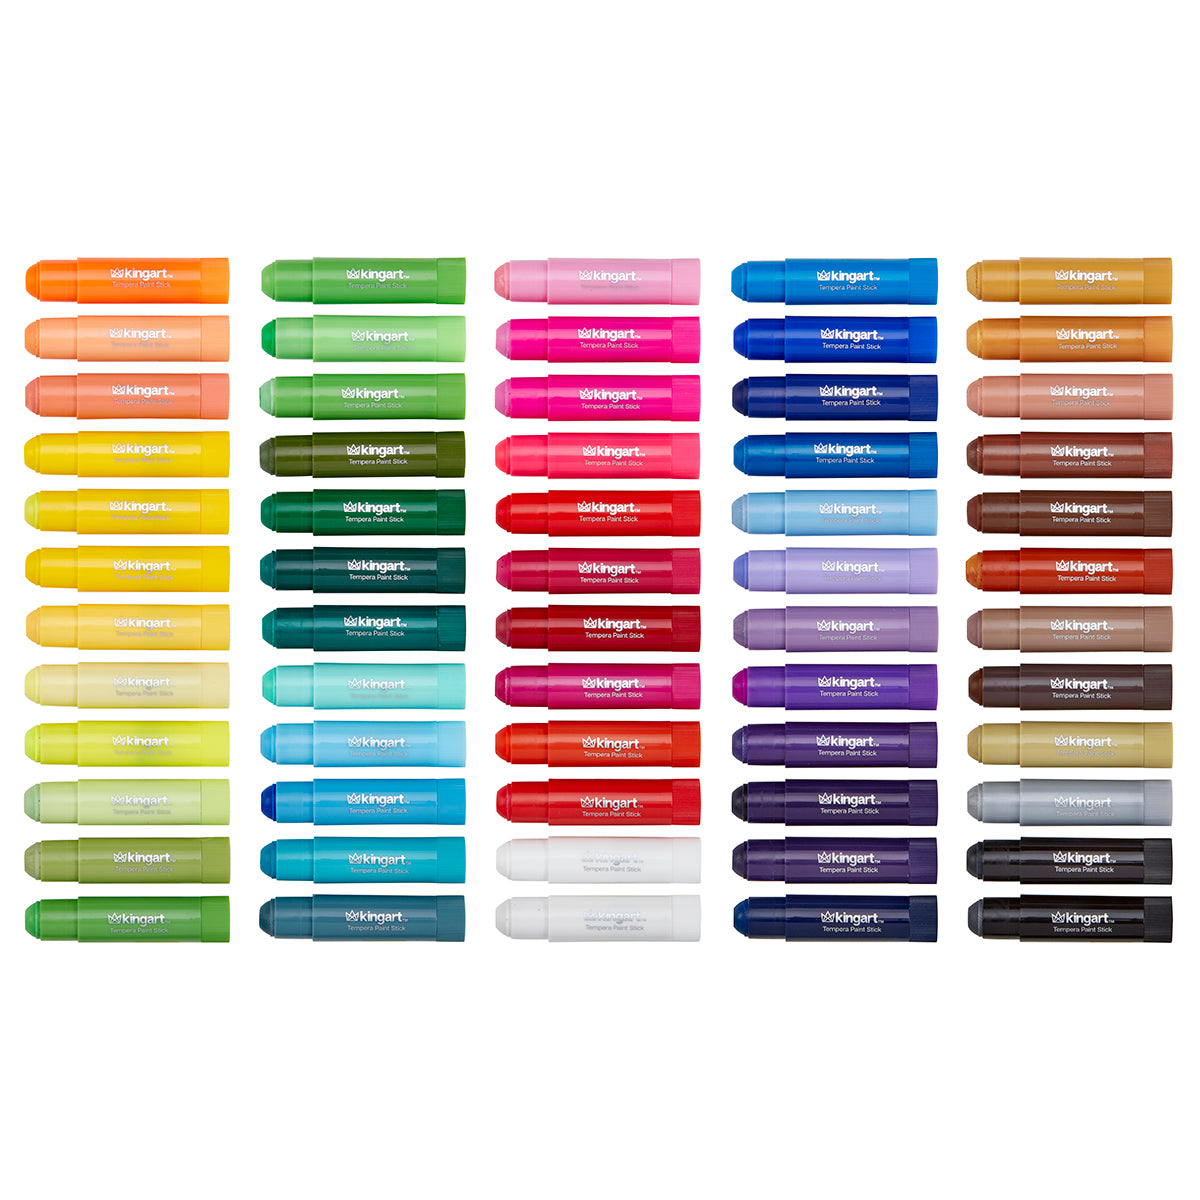 KINGART® Tempera Paint Sticks, 24 Vibrant Colors Solid Tempera